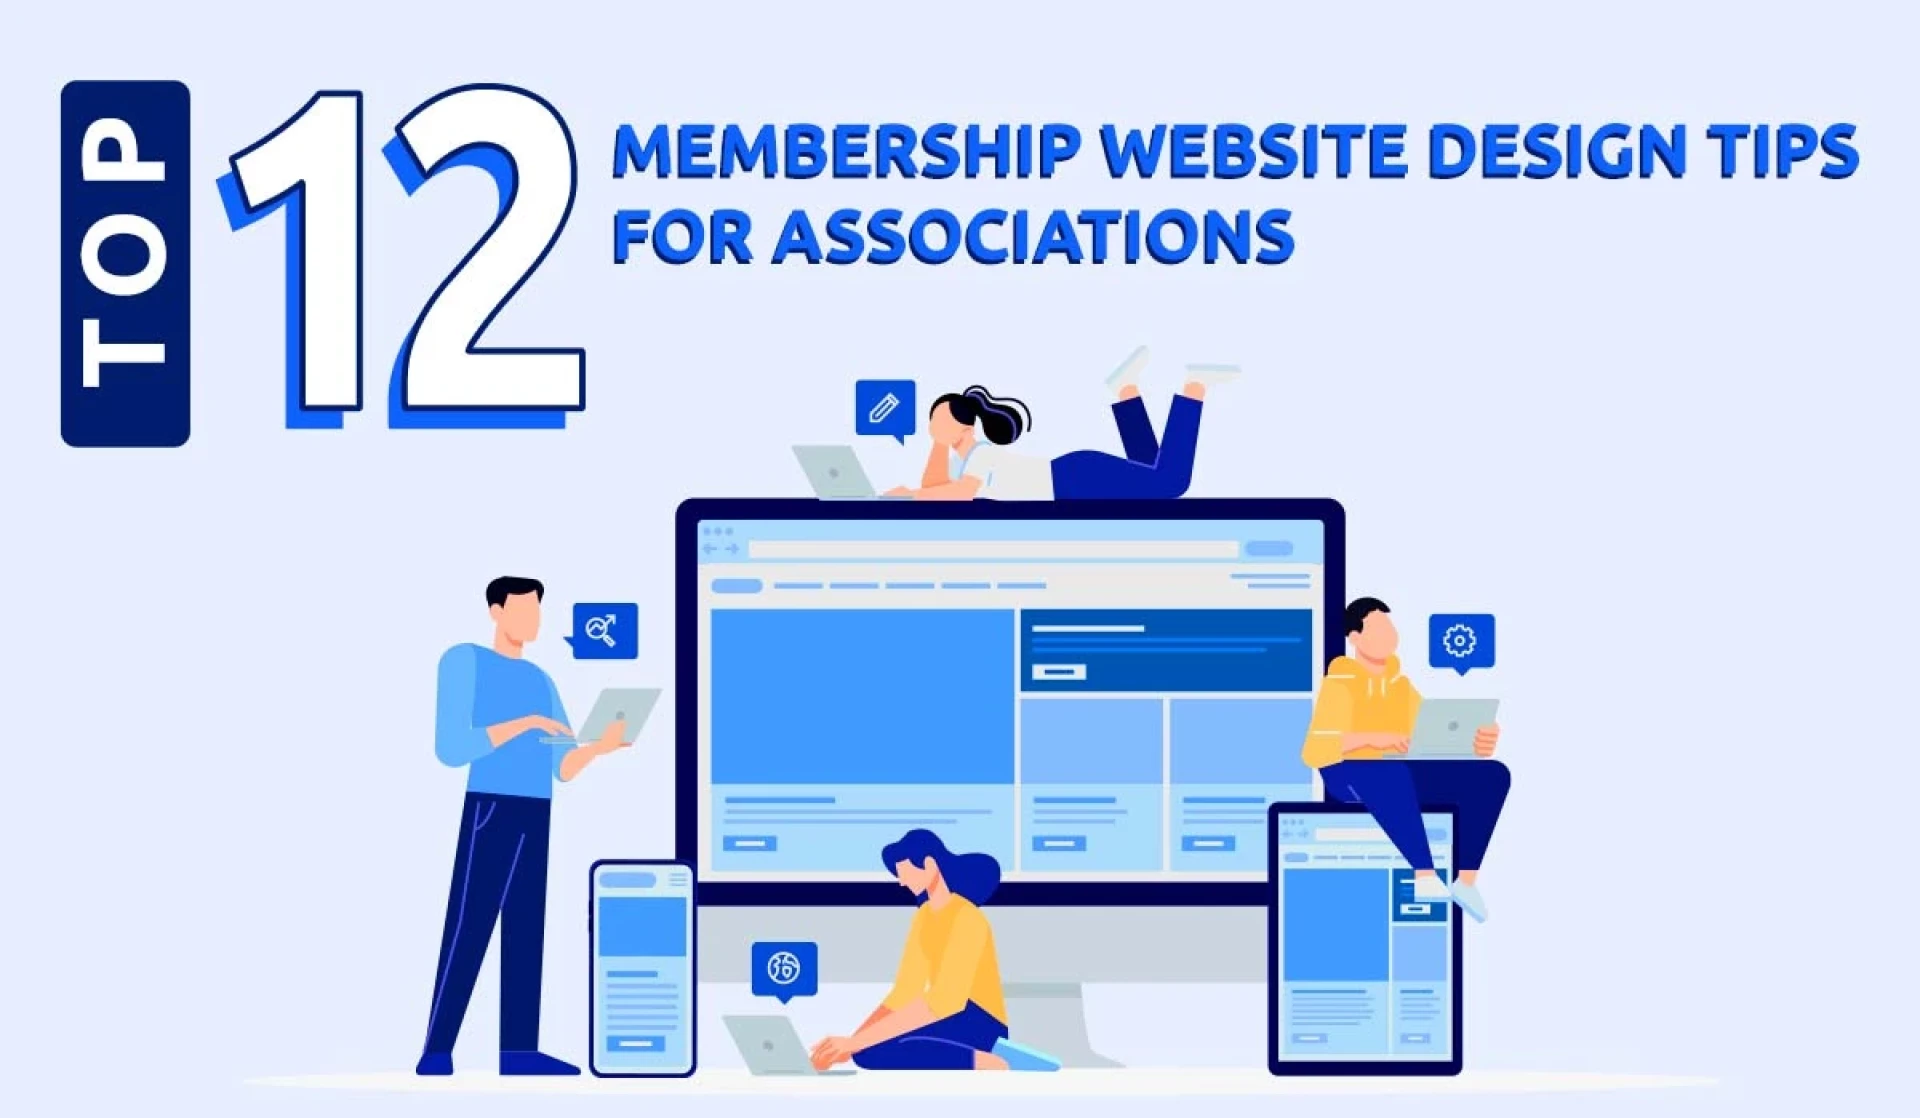 Top 12 Membership Website Design Tips For Associations